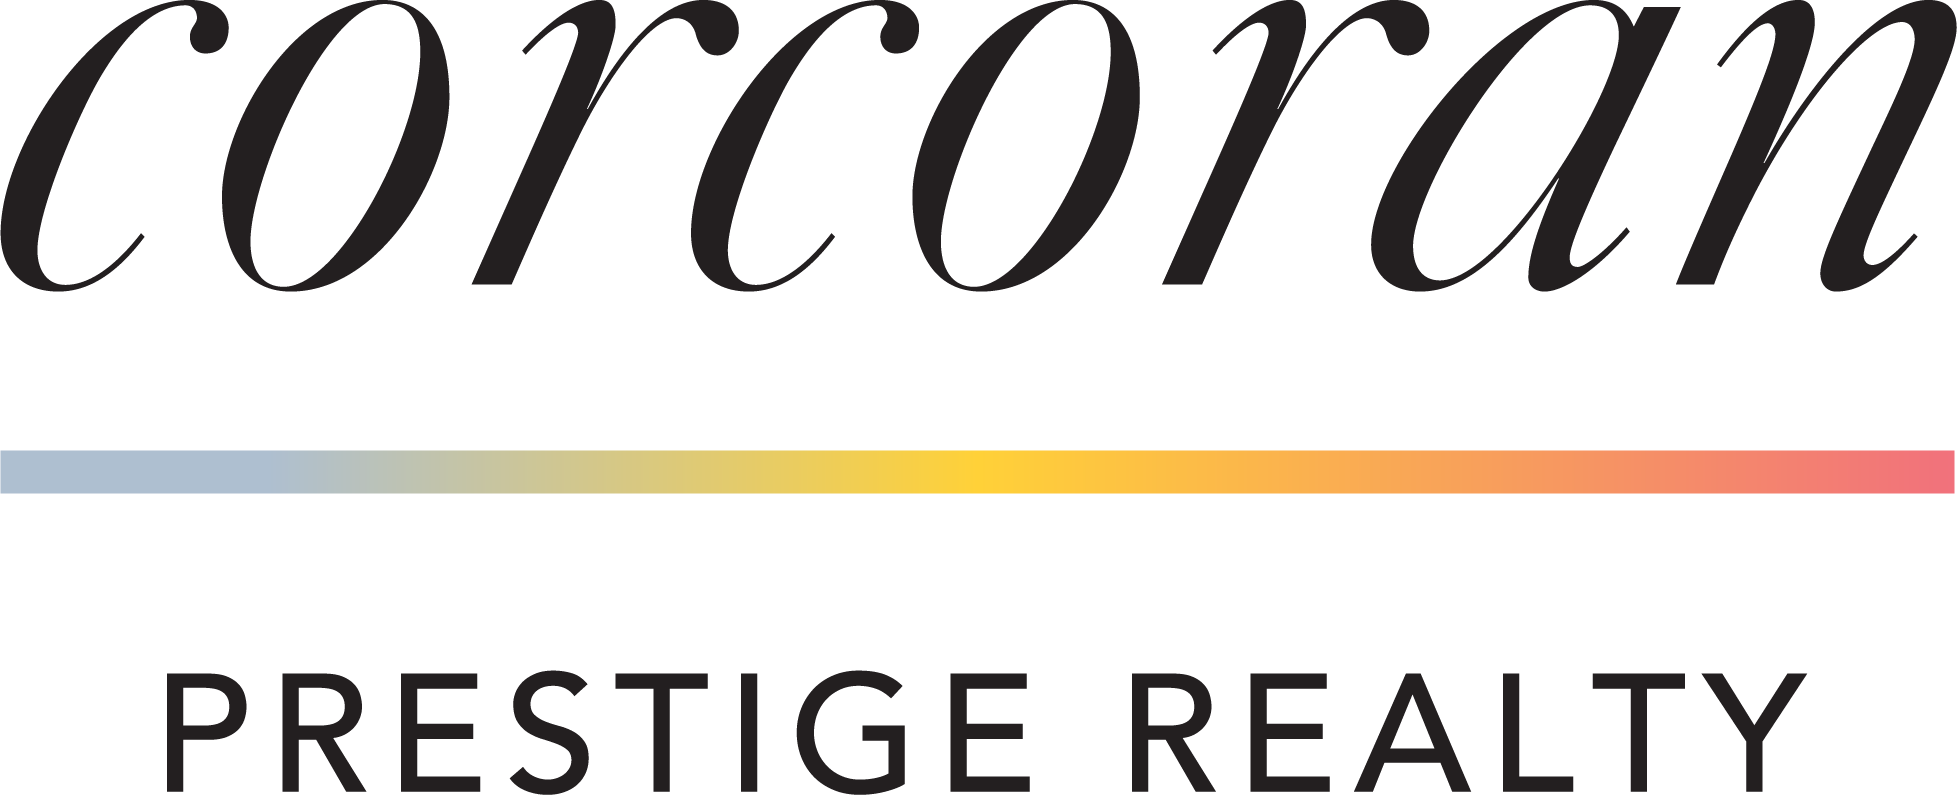 Corcoran Prestige Realty logo